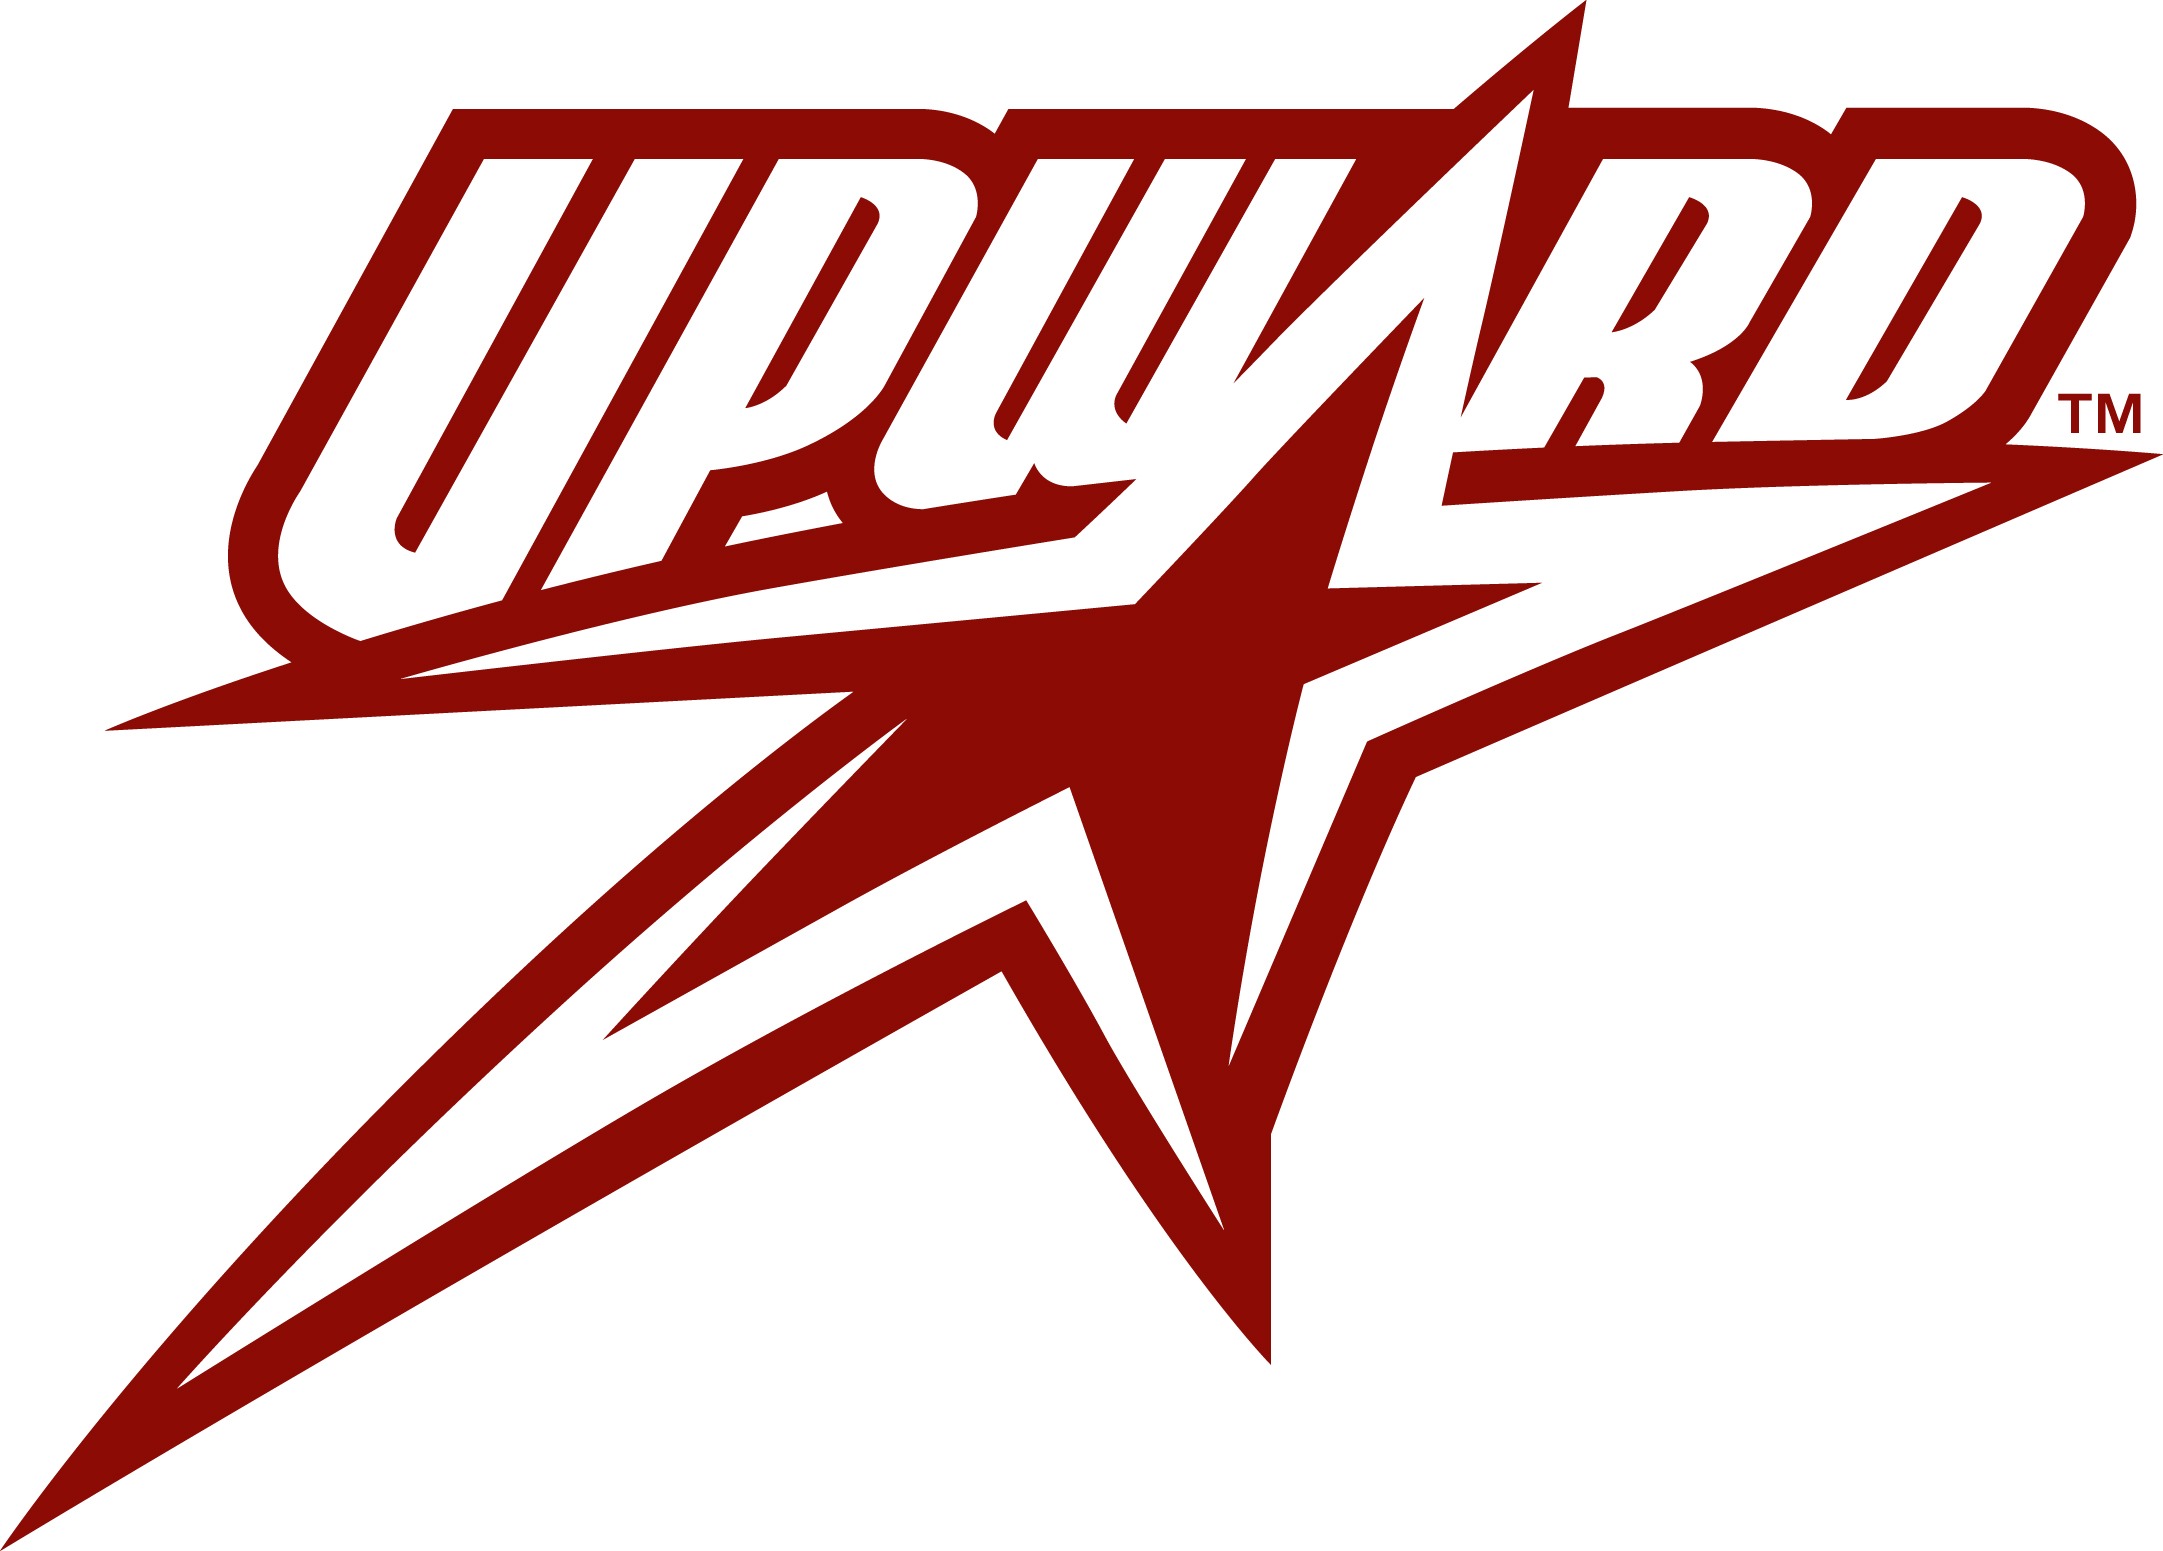  Upward Logo Red 300dpi